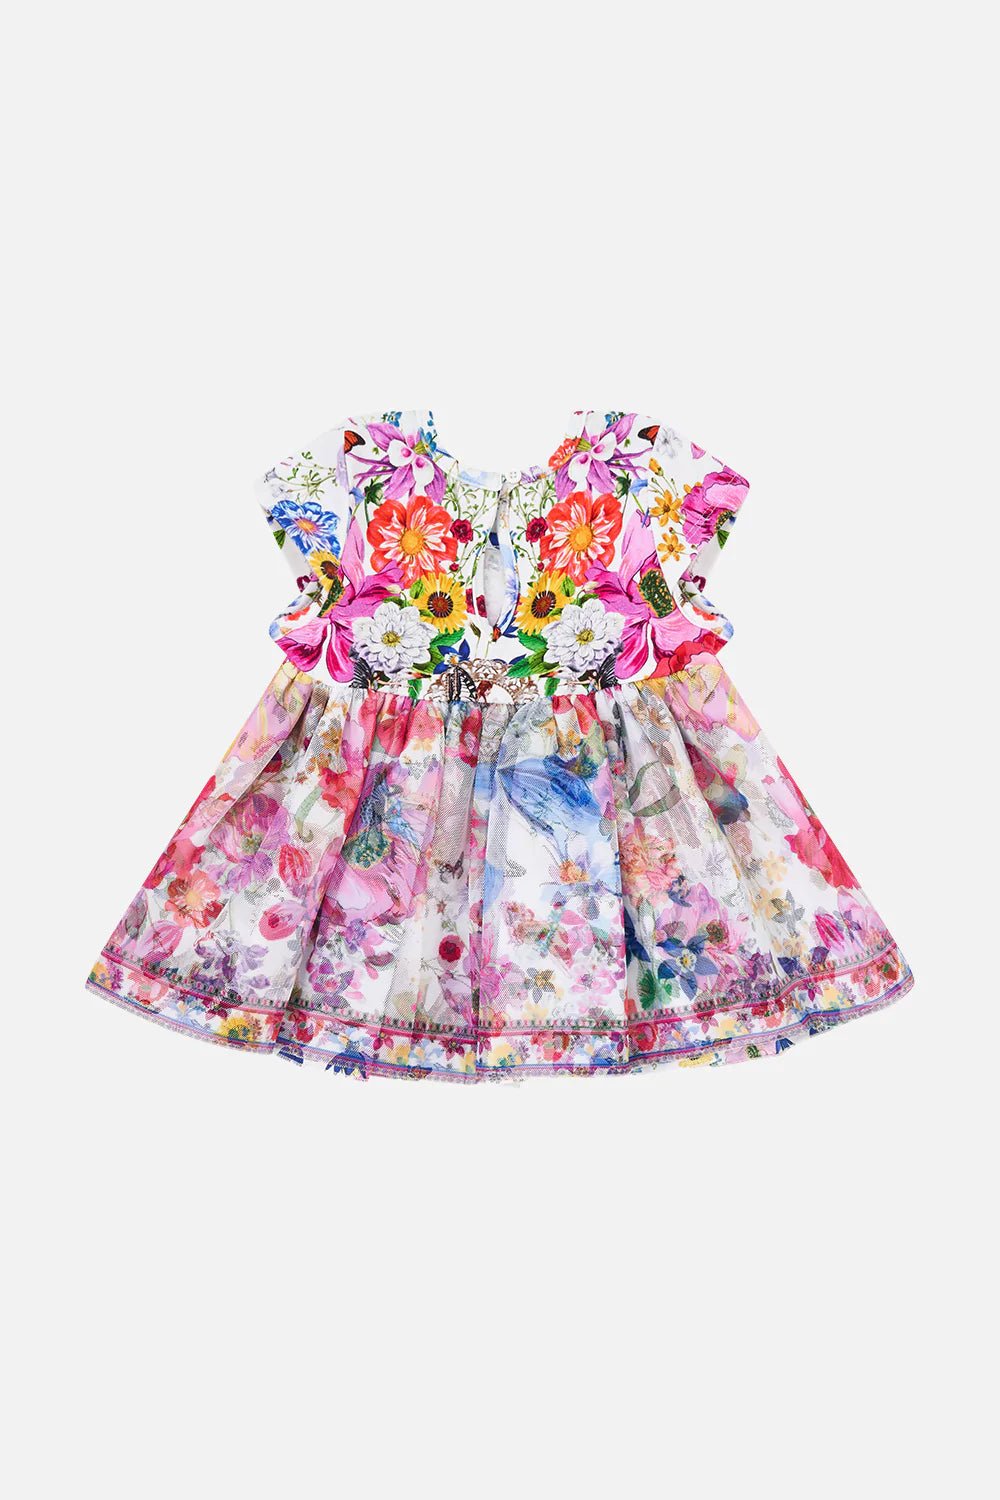 CAMILLA - Babies Jersey Tulle Dress Fairy Gang - Pinkhill, Darwin boutique, Australian high end fashion, Darwin Fashion